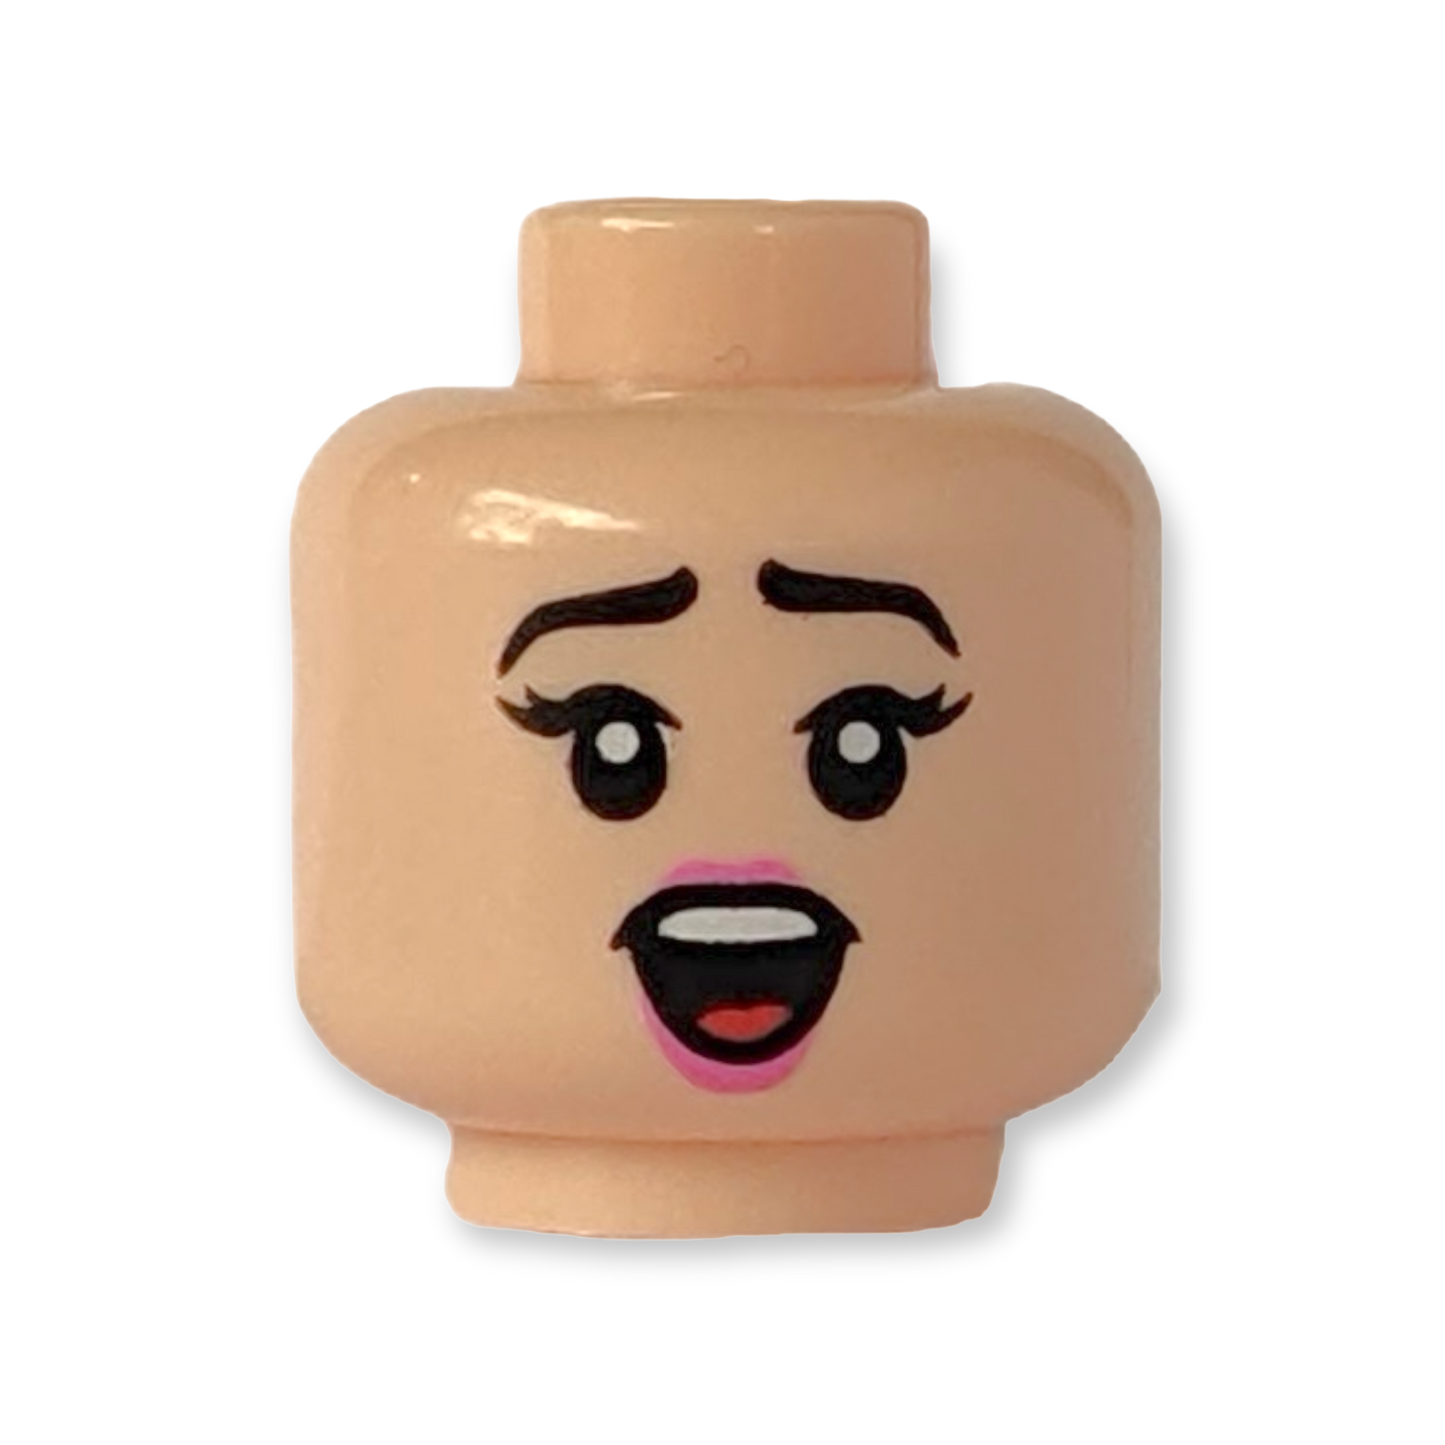 LEGO Head - 3465 Weiblich schwarze Augenbrauen dunkelrosa Lippen